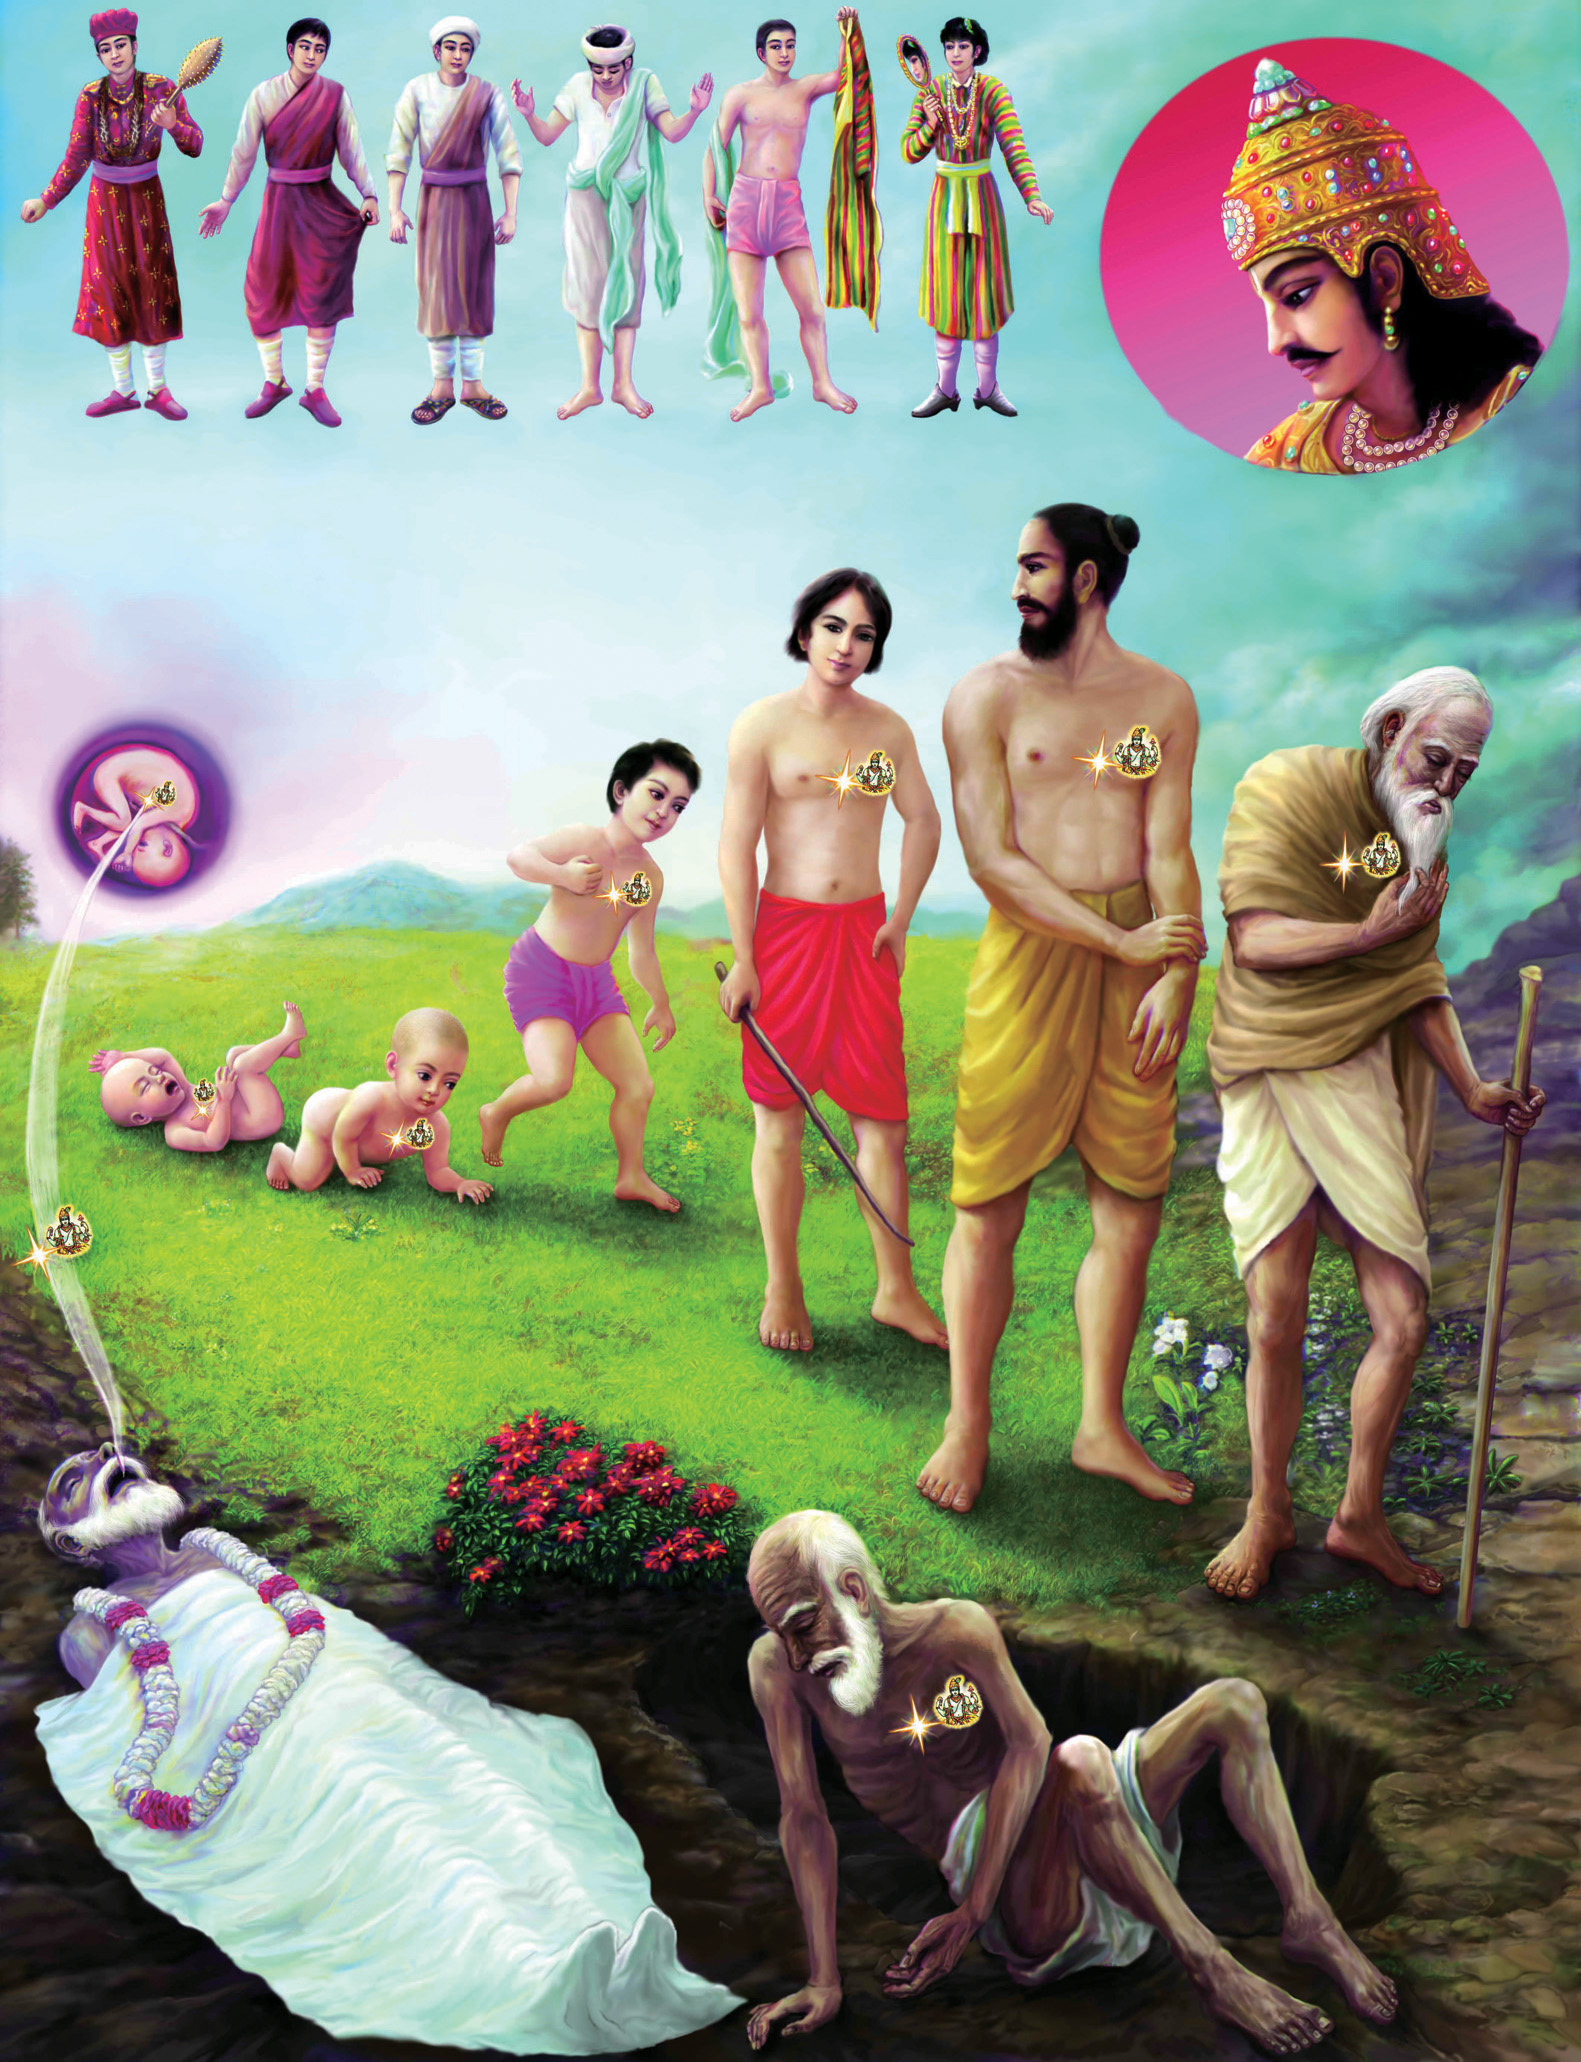 Bhagavad Gita: The soul changes bodies as a person changes garments.